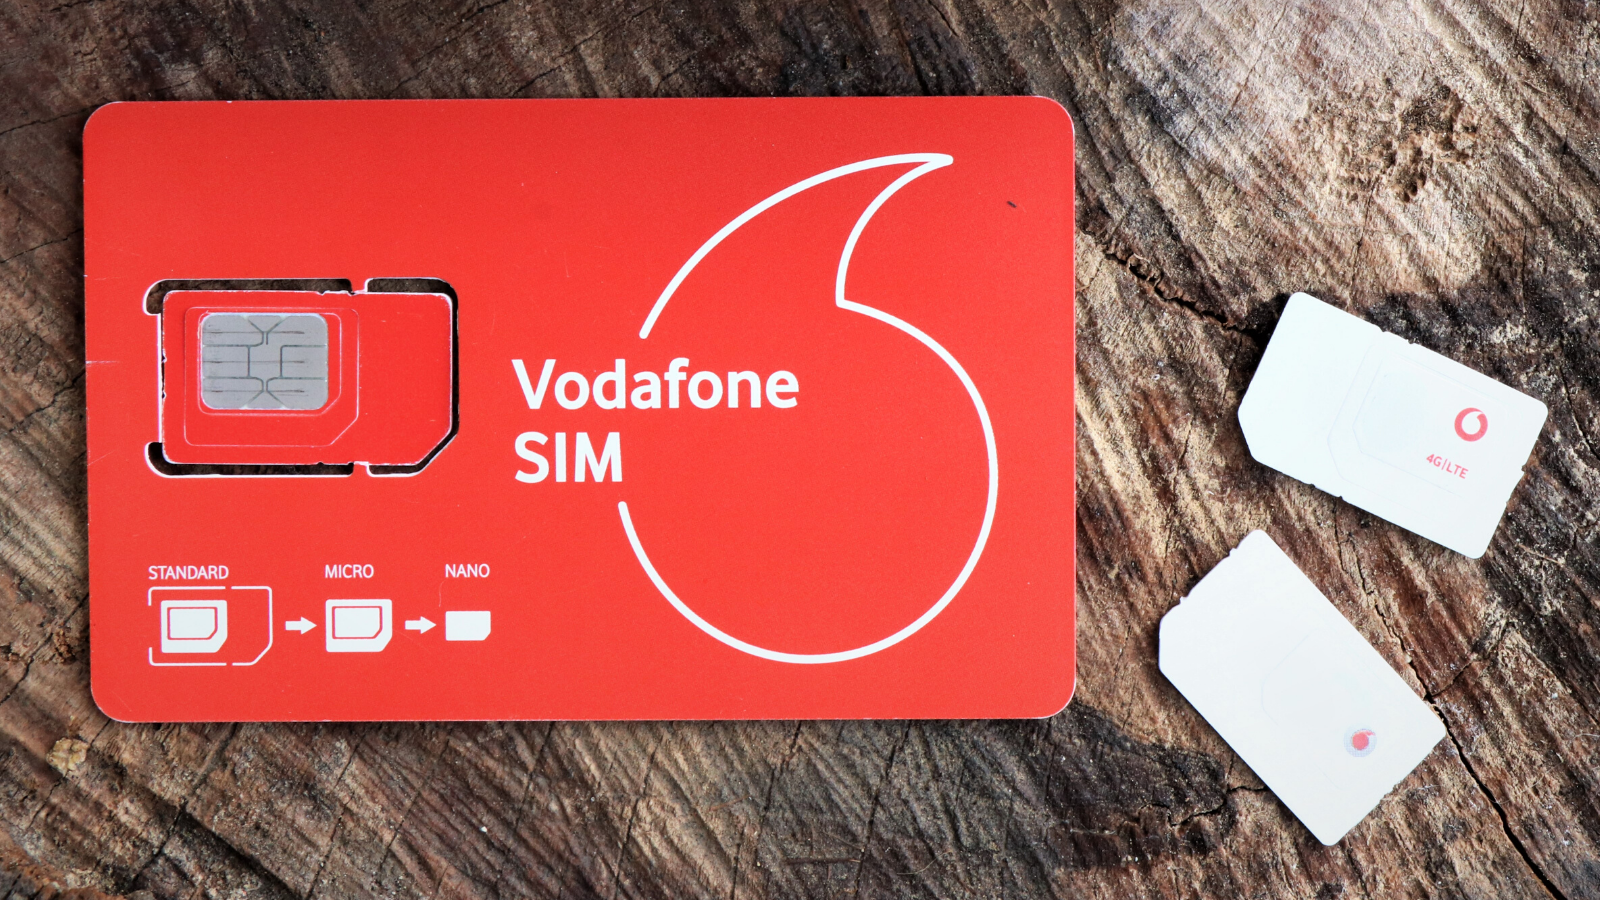 Planes Vodafone Unlimited 50% de descuento durante seis meses